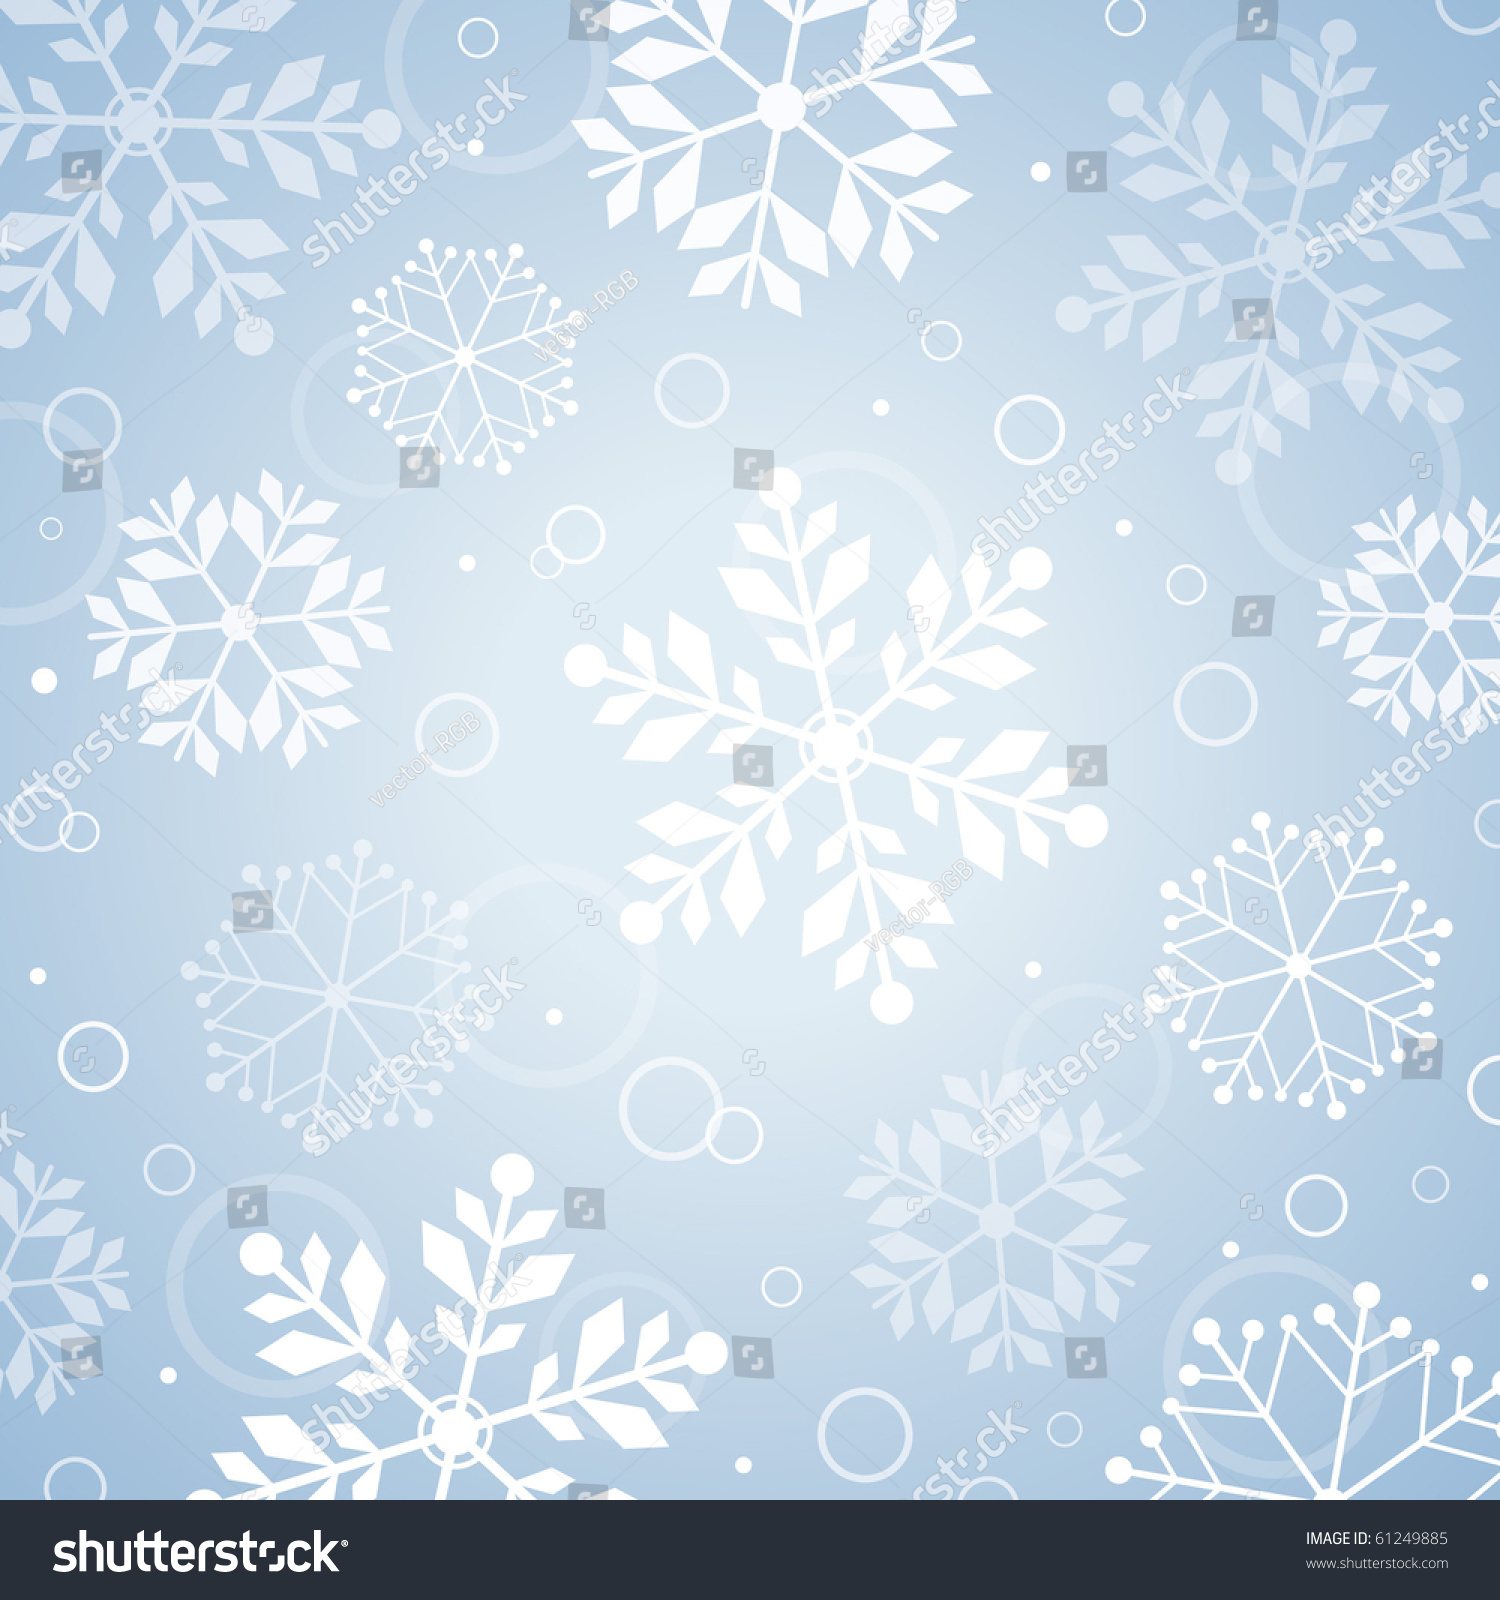 Download Edit Vectors Free Online - snow background, | Shutterstock Editor